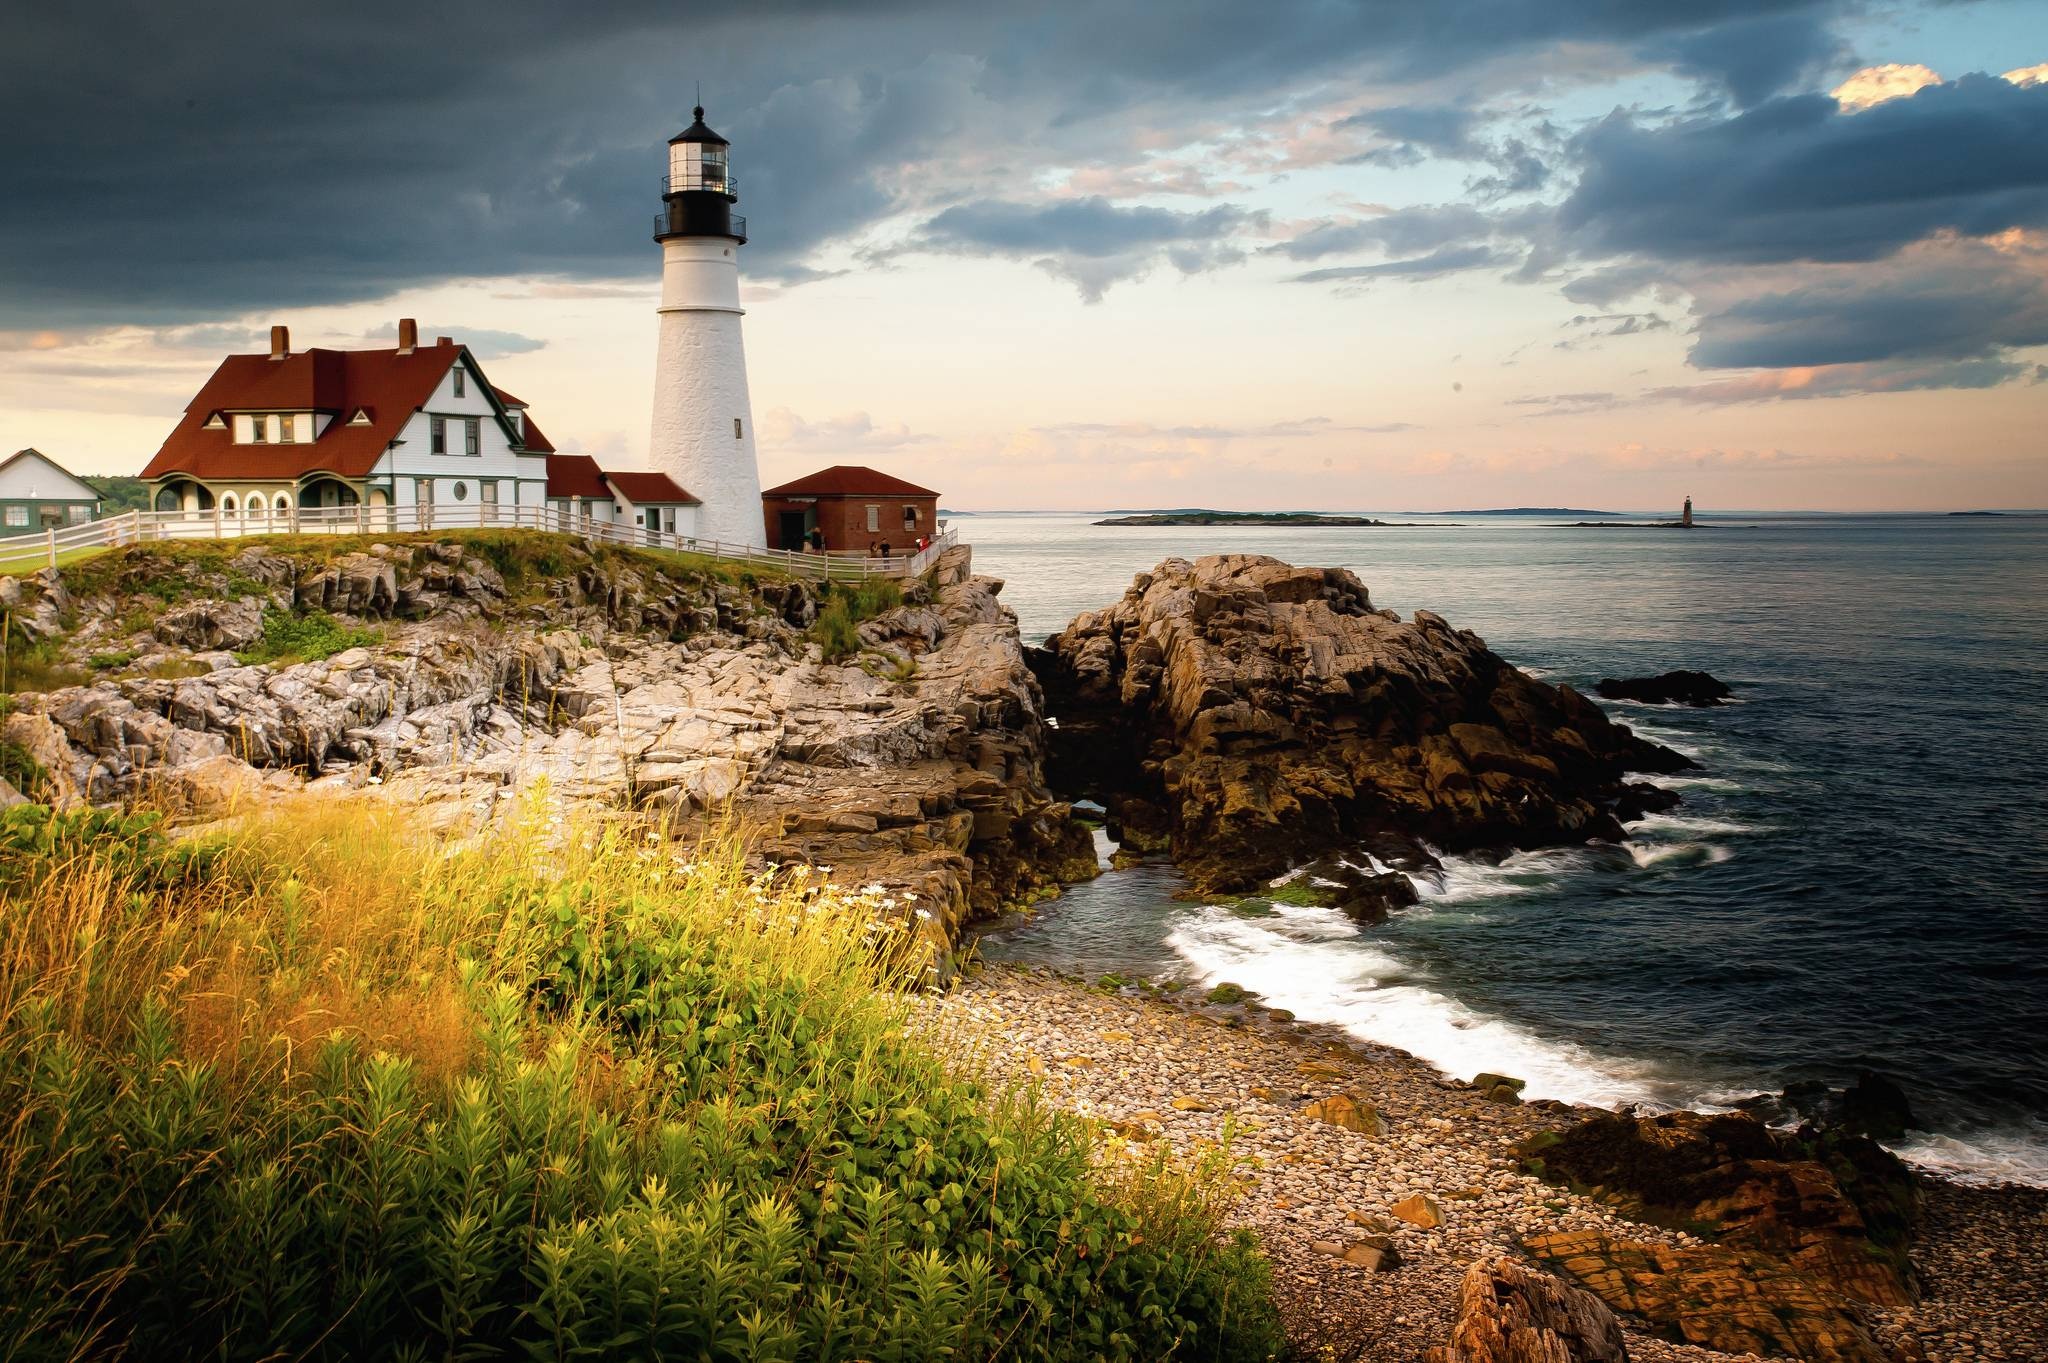 Beach and lighthouse wallpaper, Desktop background, Beautiful scenery, Ocean vibes, 2050x1370 HD Desktop